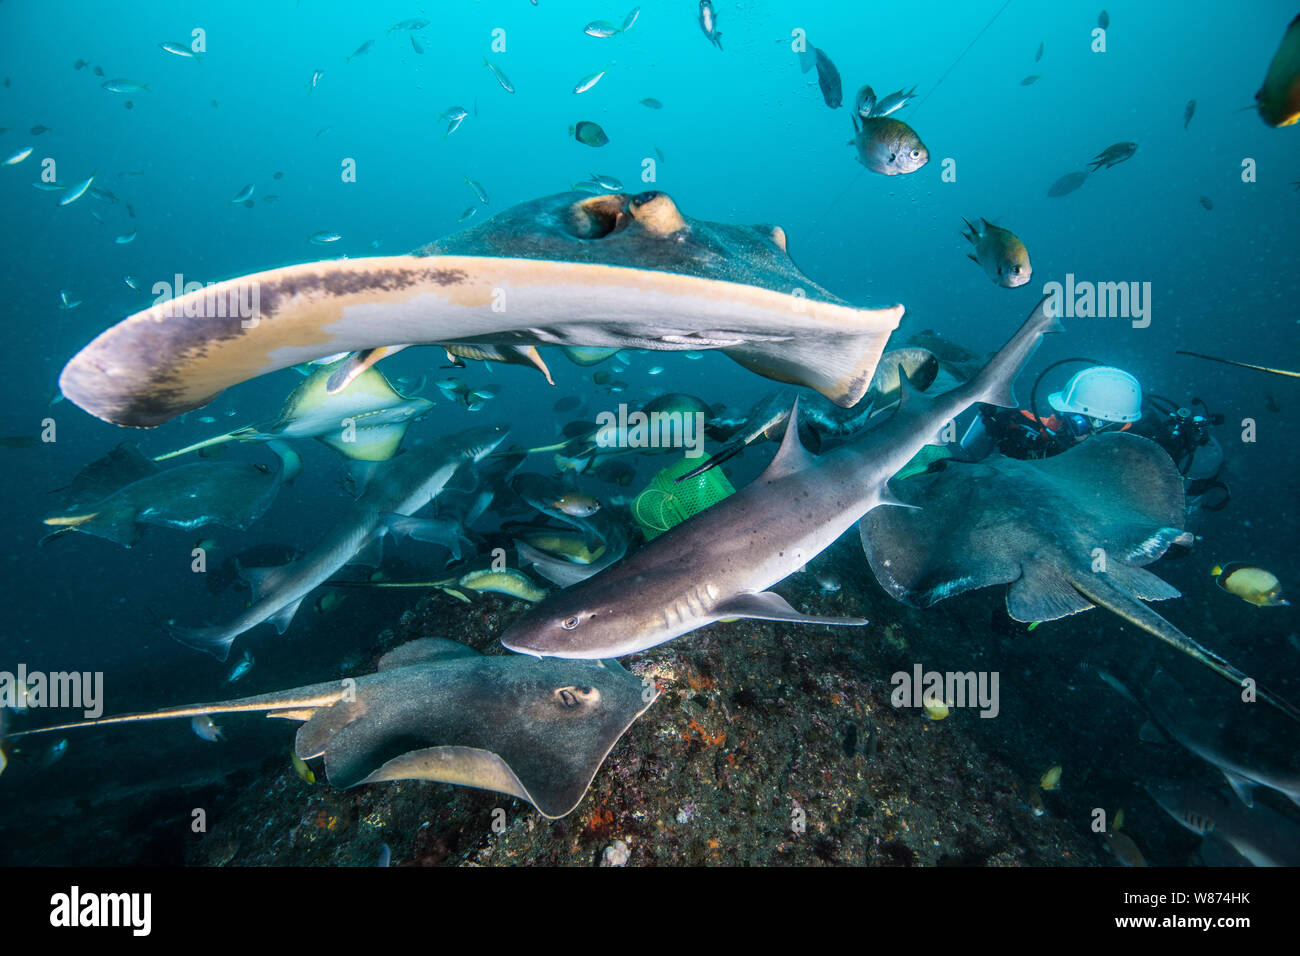 The mob of Banded Hound Sharks and Japanese stingrays rushing to the bait. Japan. Ito, Tateyama, Chiba, Japan (low angle) Stock Photo